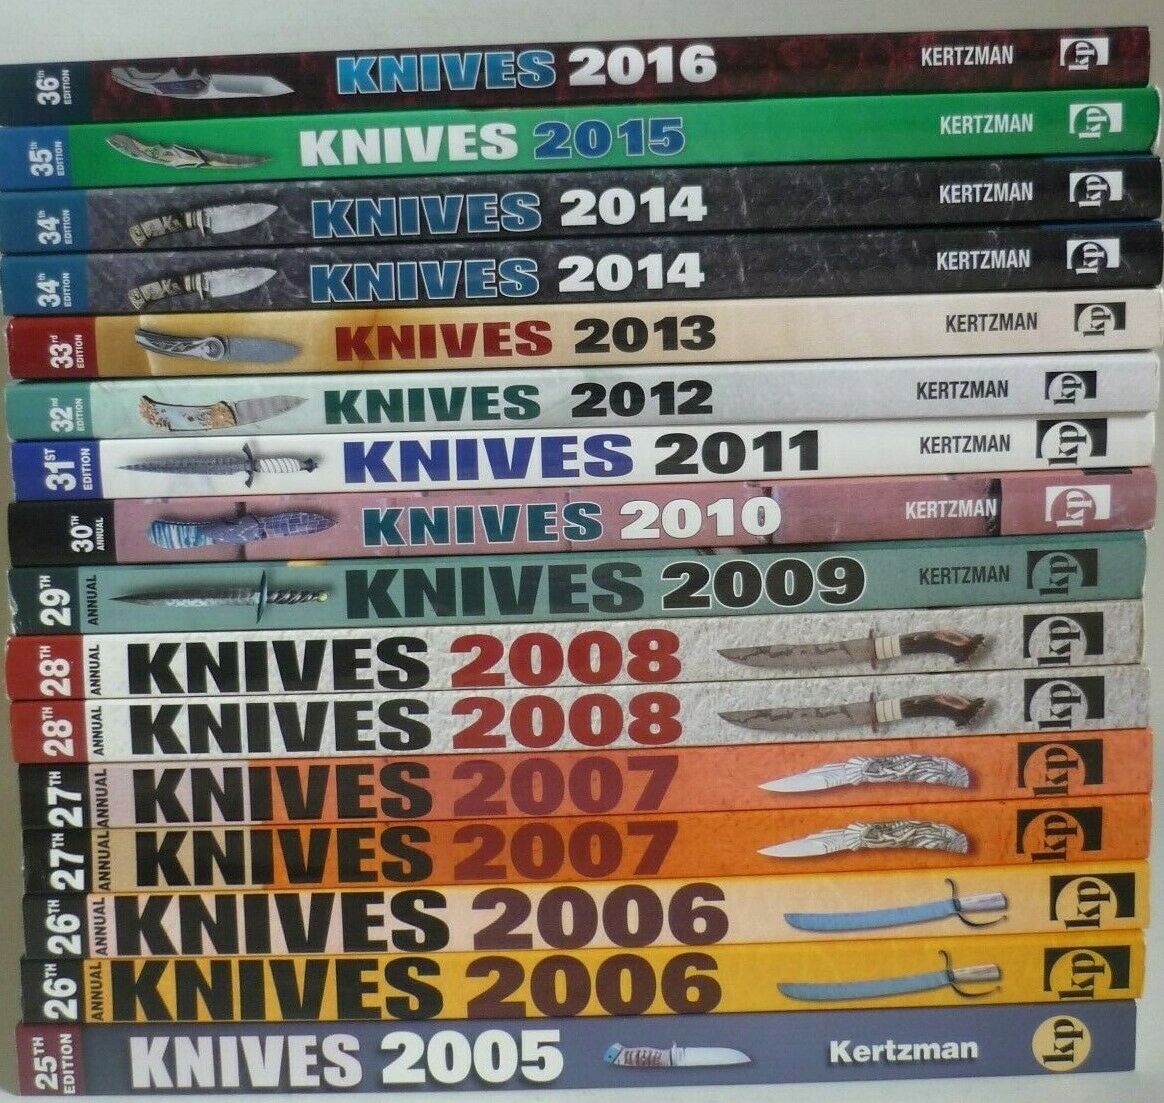 Knives '05 '06 '07 '08 09 10 11 12 13 '14 '15 Or '16 Book By Joe Kertzman Choice